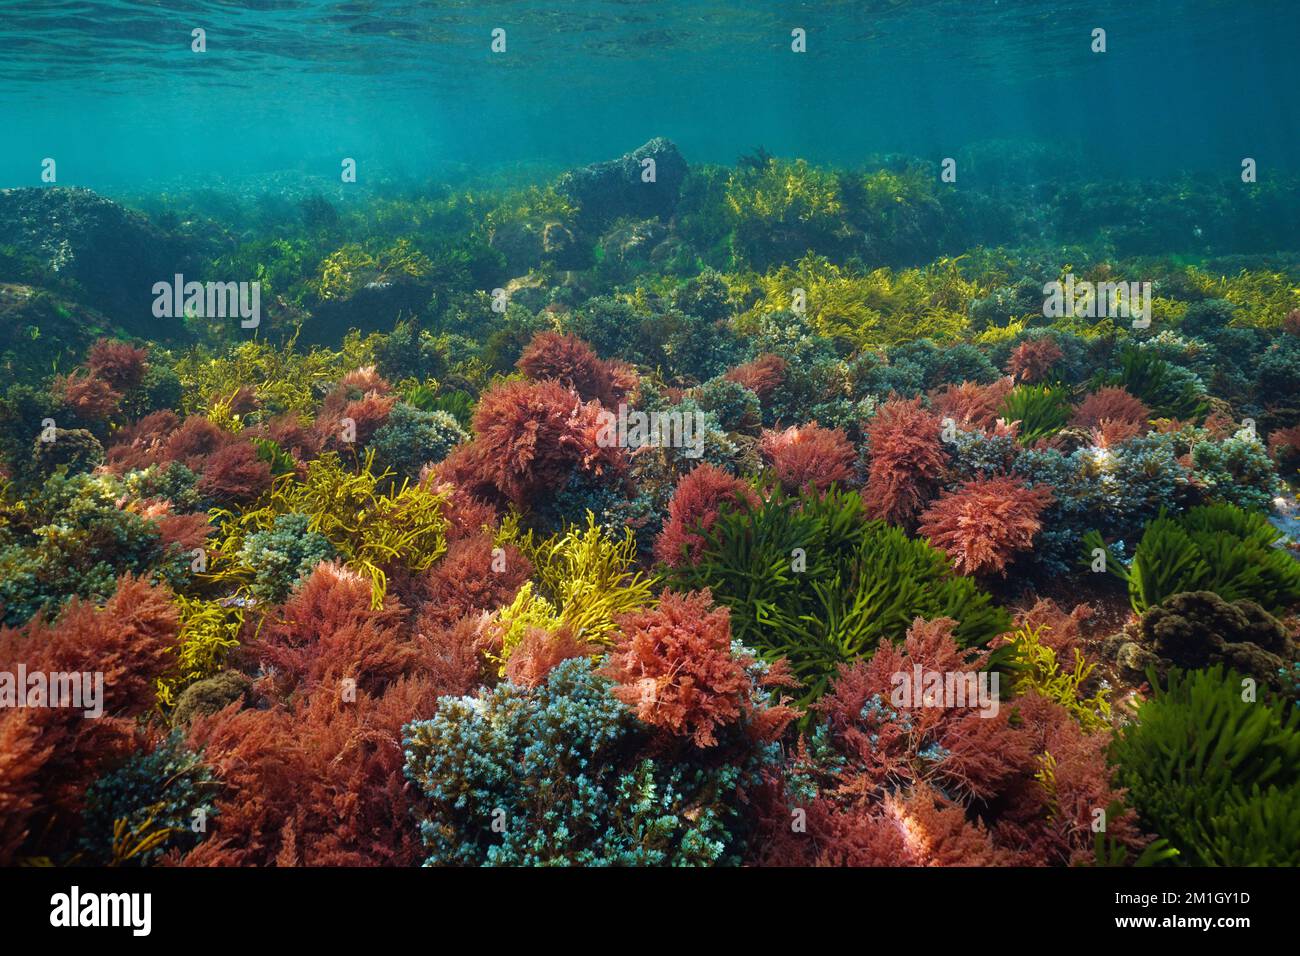 Colorful algae underwater in the sea, natural scene, Atlantic ocean, Spain, Galicia Stock Photo